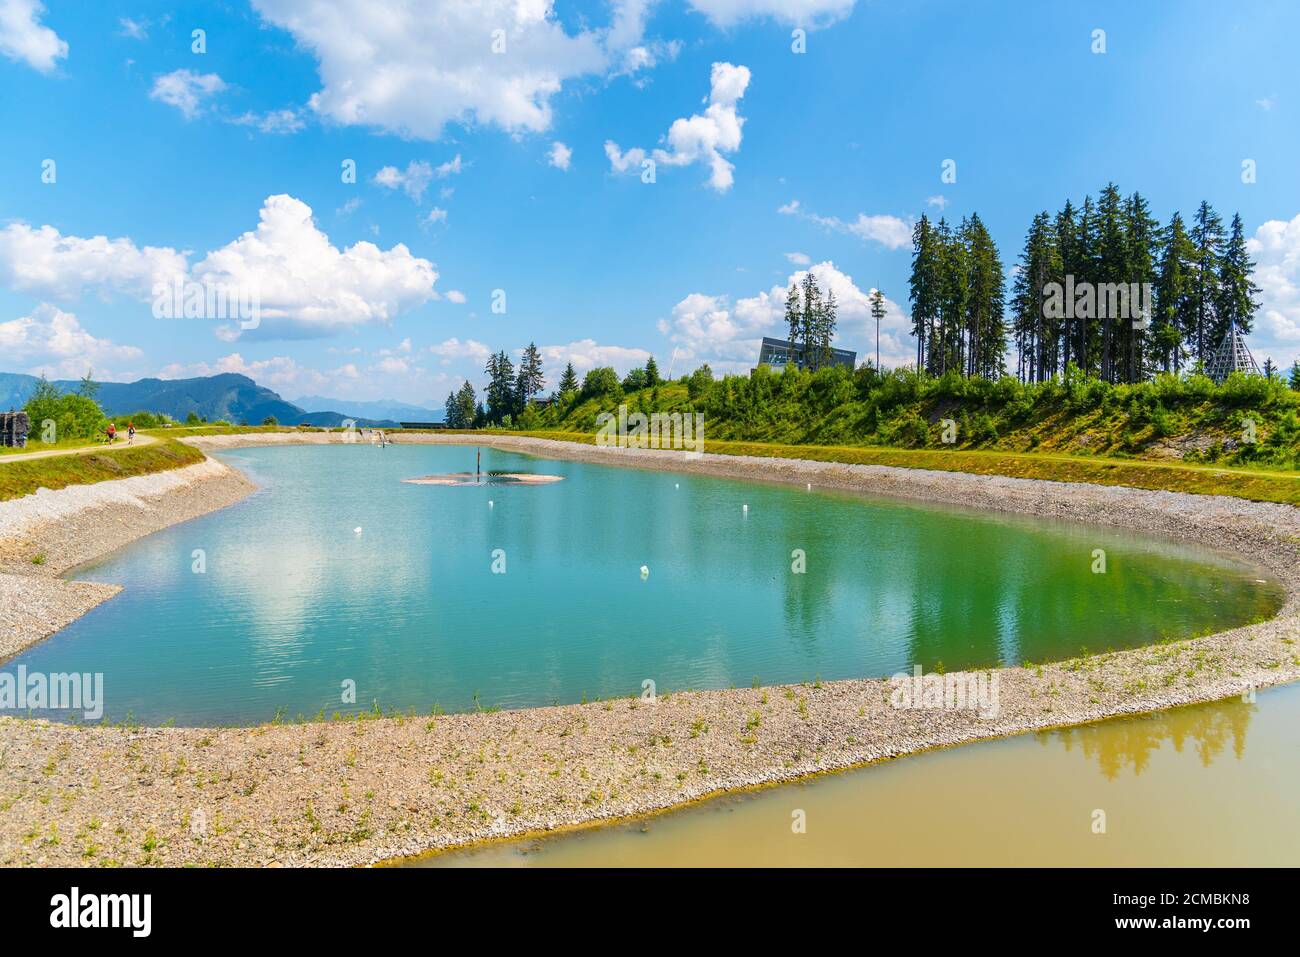 Water reservoir at Glocknerhaus near Zell am See, Austrian Alps, Austria Stock Photo